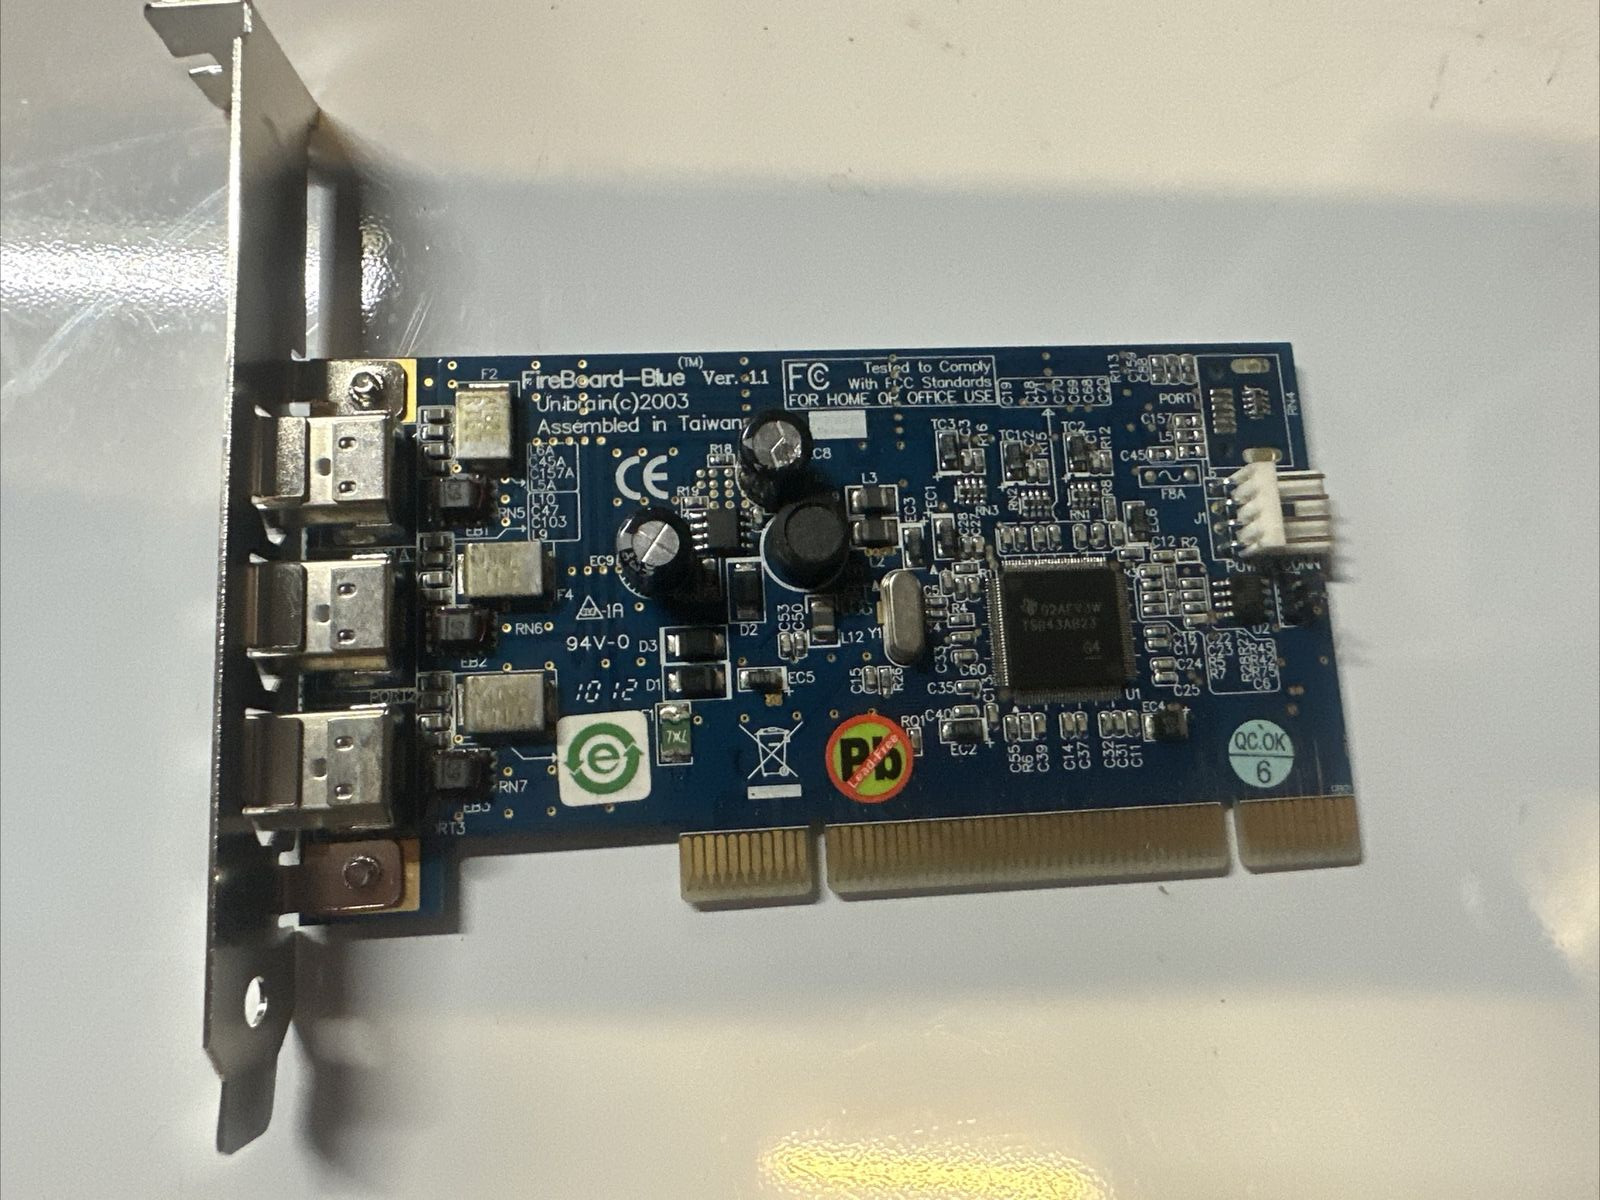 Unibrain (c)2003 Fireboard-Blue 3 Port 1394a PCI Digital Interface Card